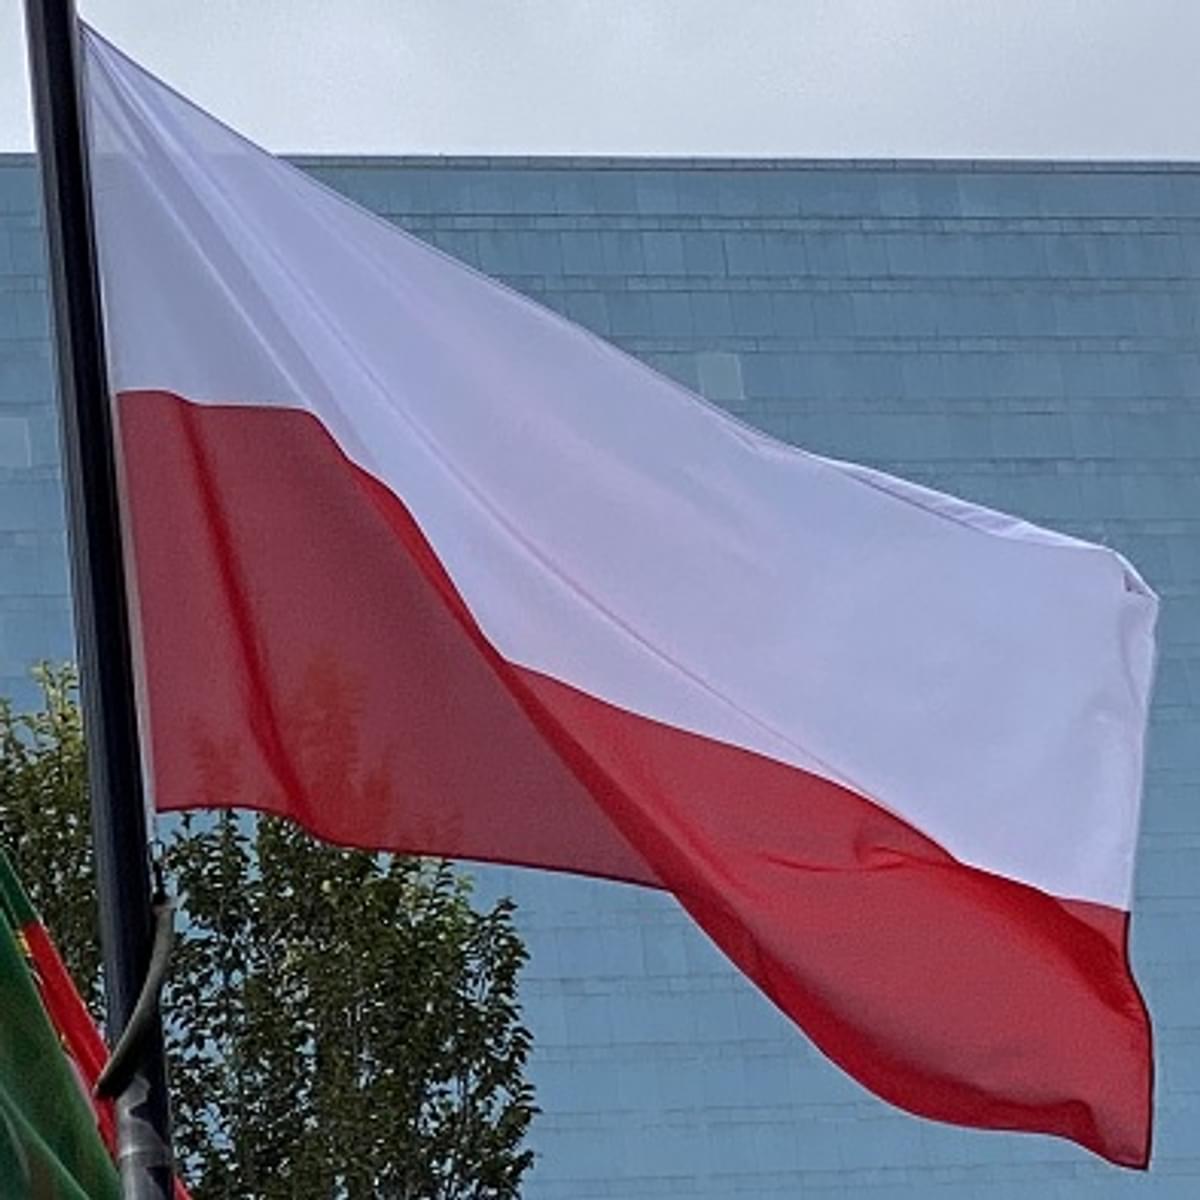 Poolse regering wordt beschuldigd van illegale aankoop Pegasus software image